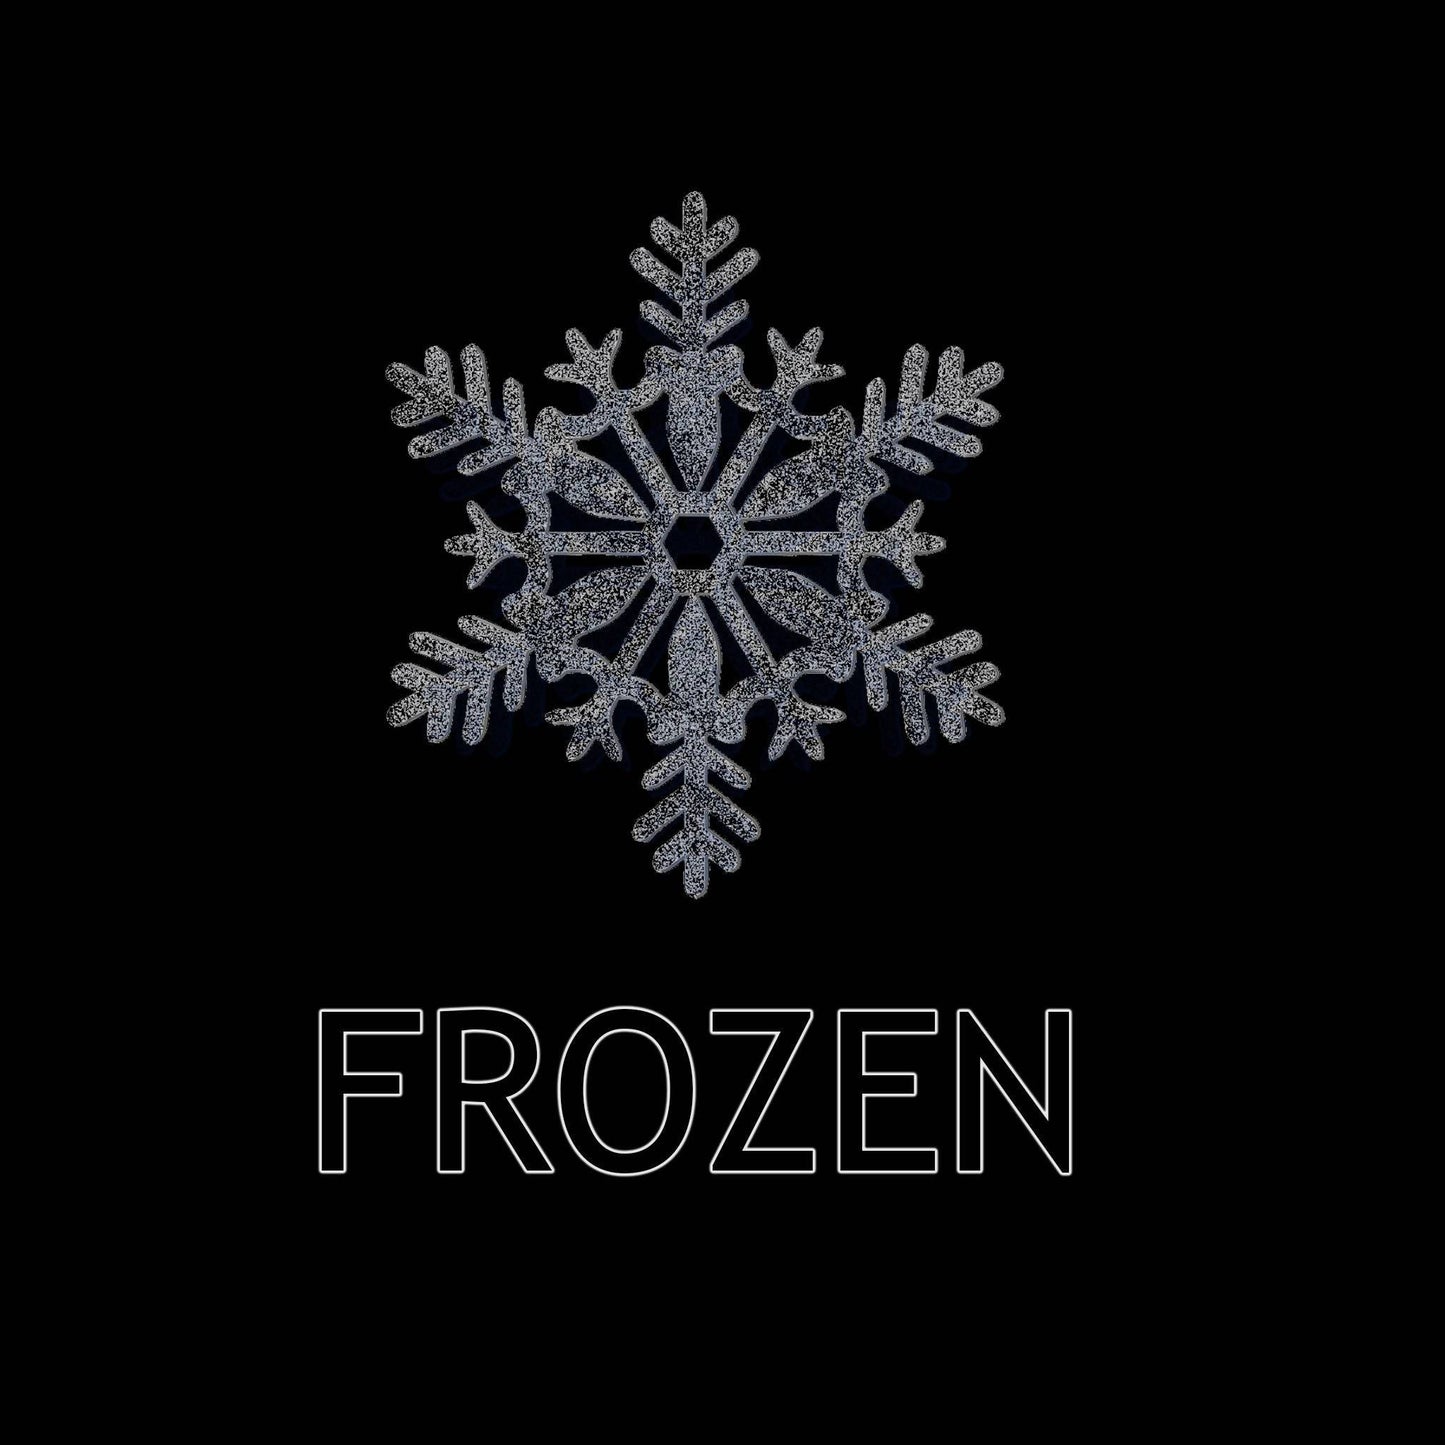 Frozen - 110 Bpm - Cm - Male - Vokaal